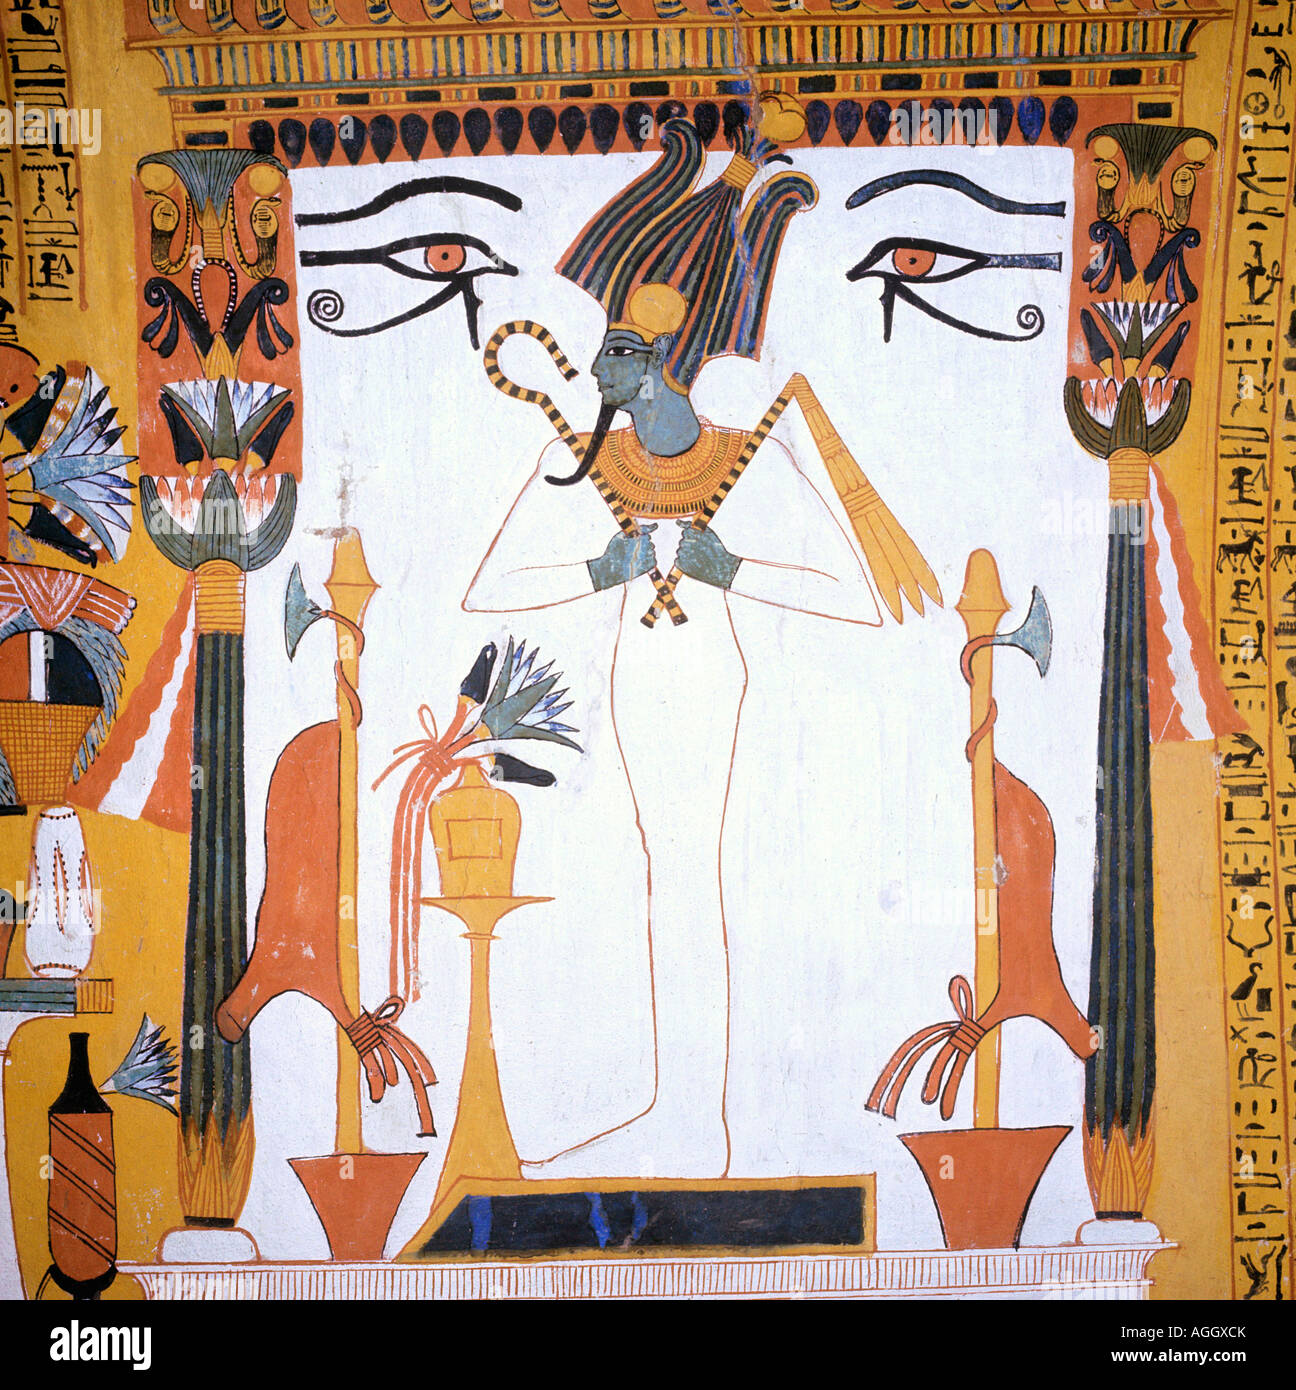 Osiris, Gott der Unterwelt, Deir el-Medina, Ägypten Stockfotografie - Alamy